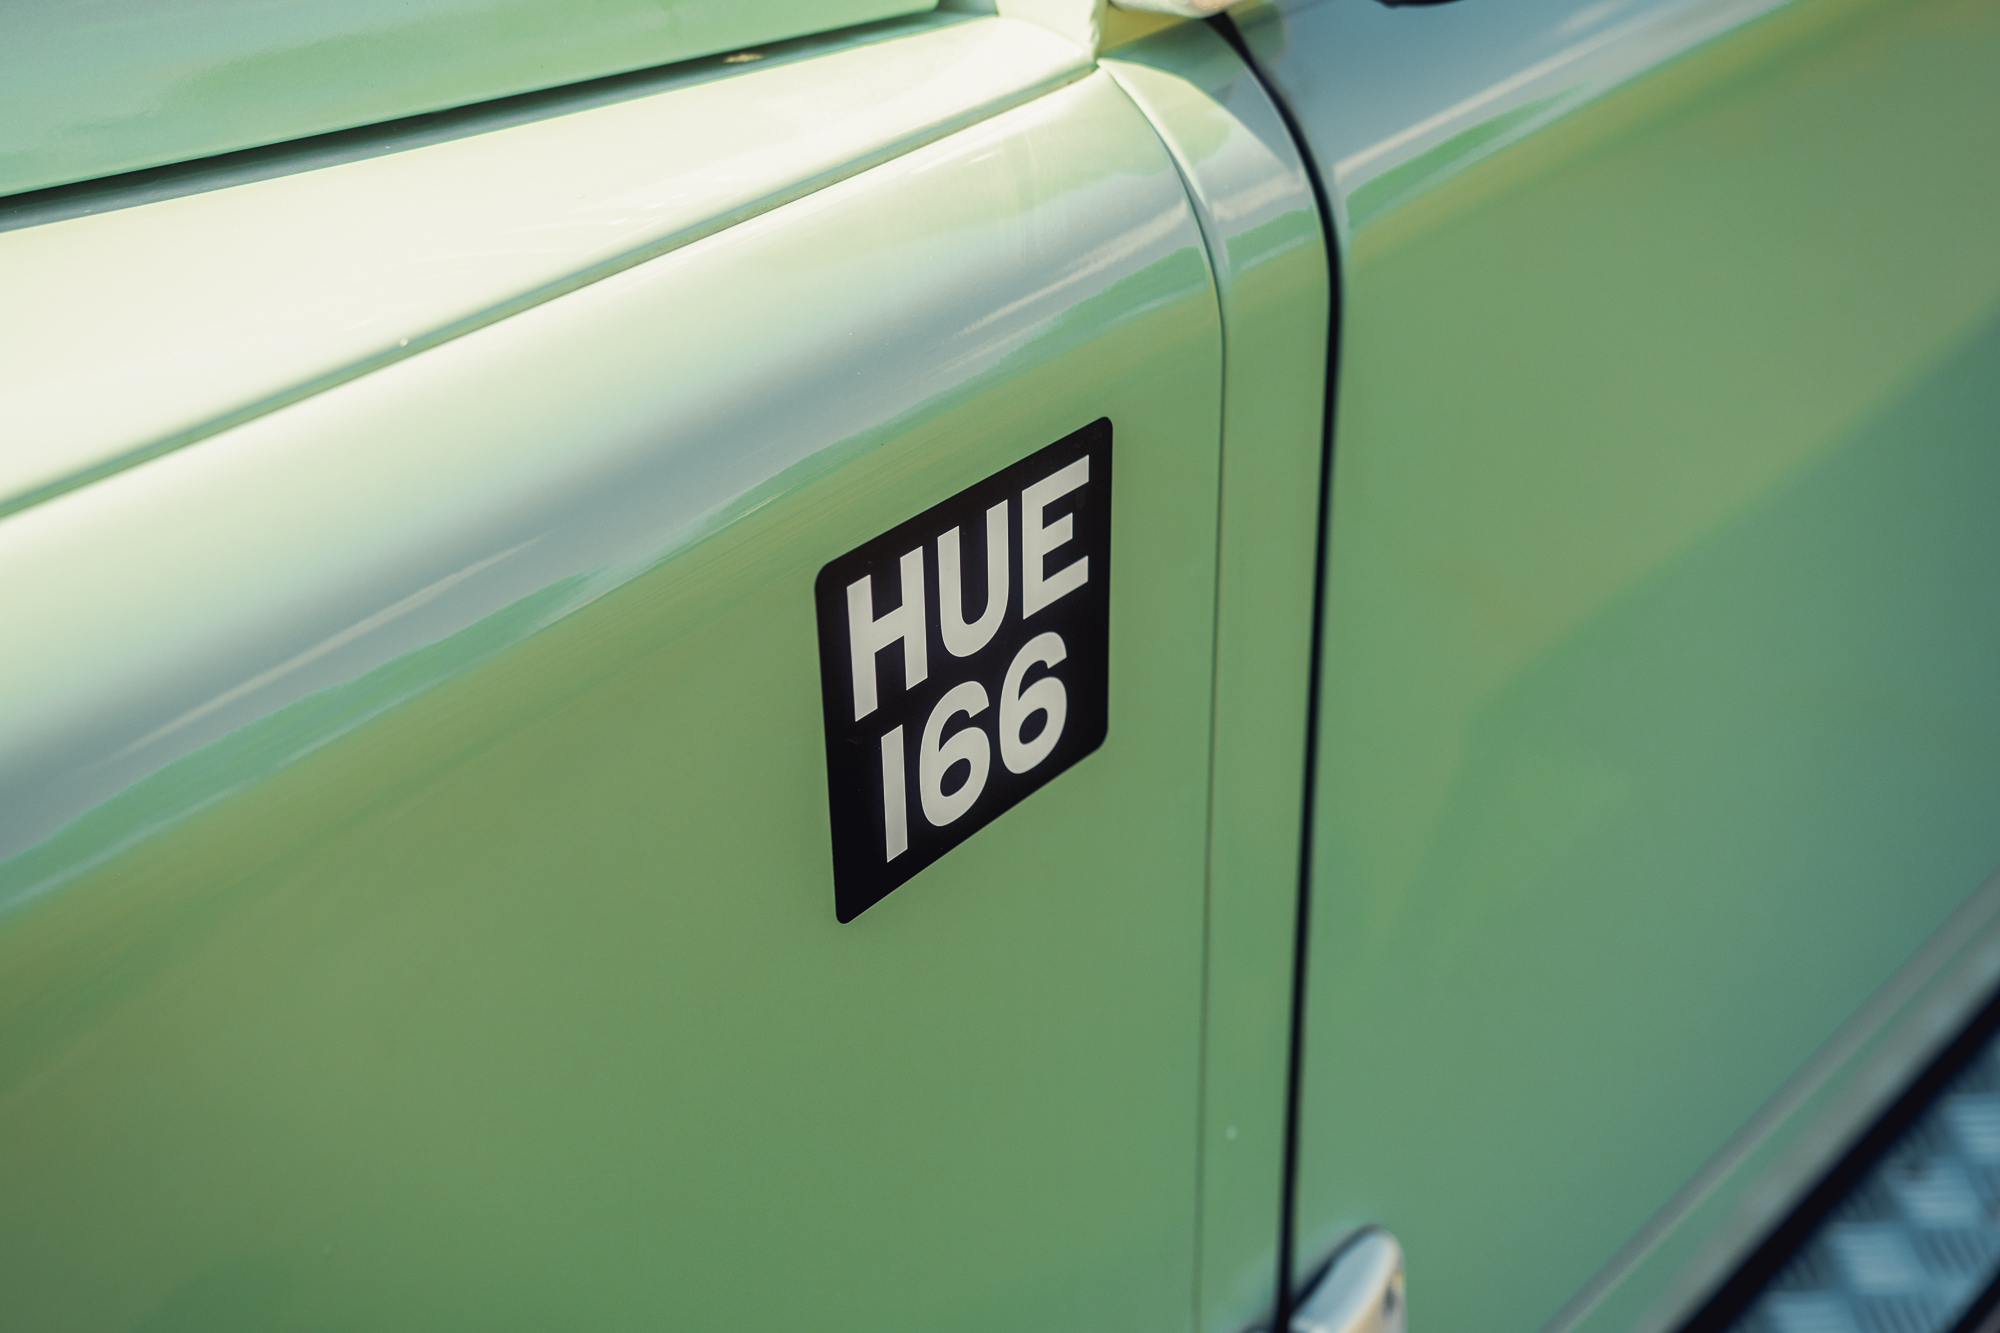 Original Land Rover Gear Hue 166 Schlüsselanhänger 